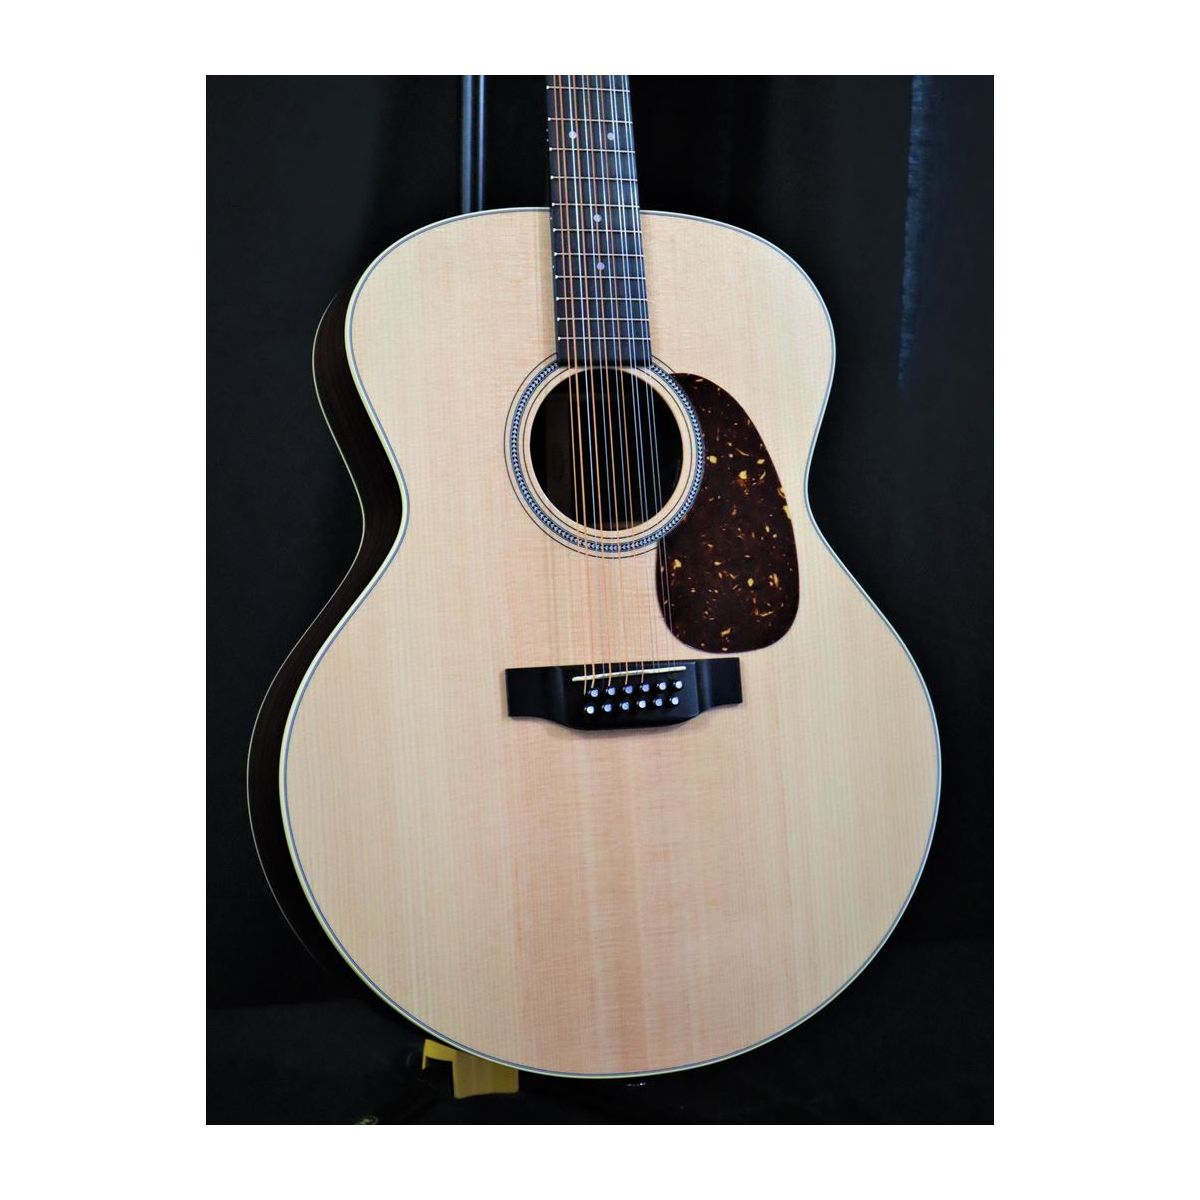 Martin GJ16E12 Grand jumbo acoustic guitar 12 electroacoustic strings